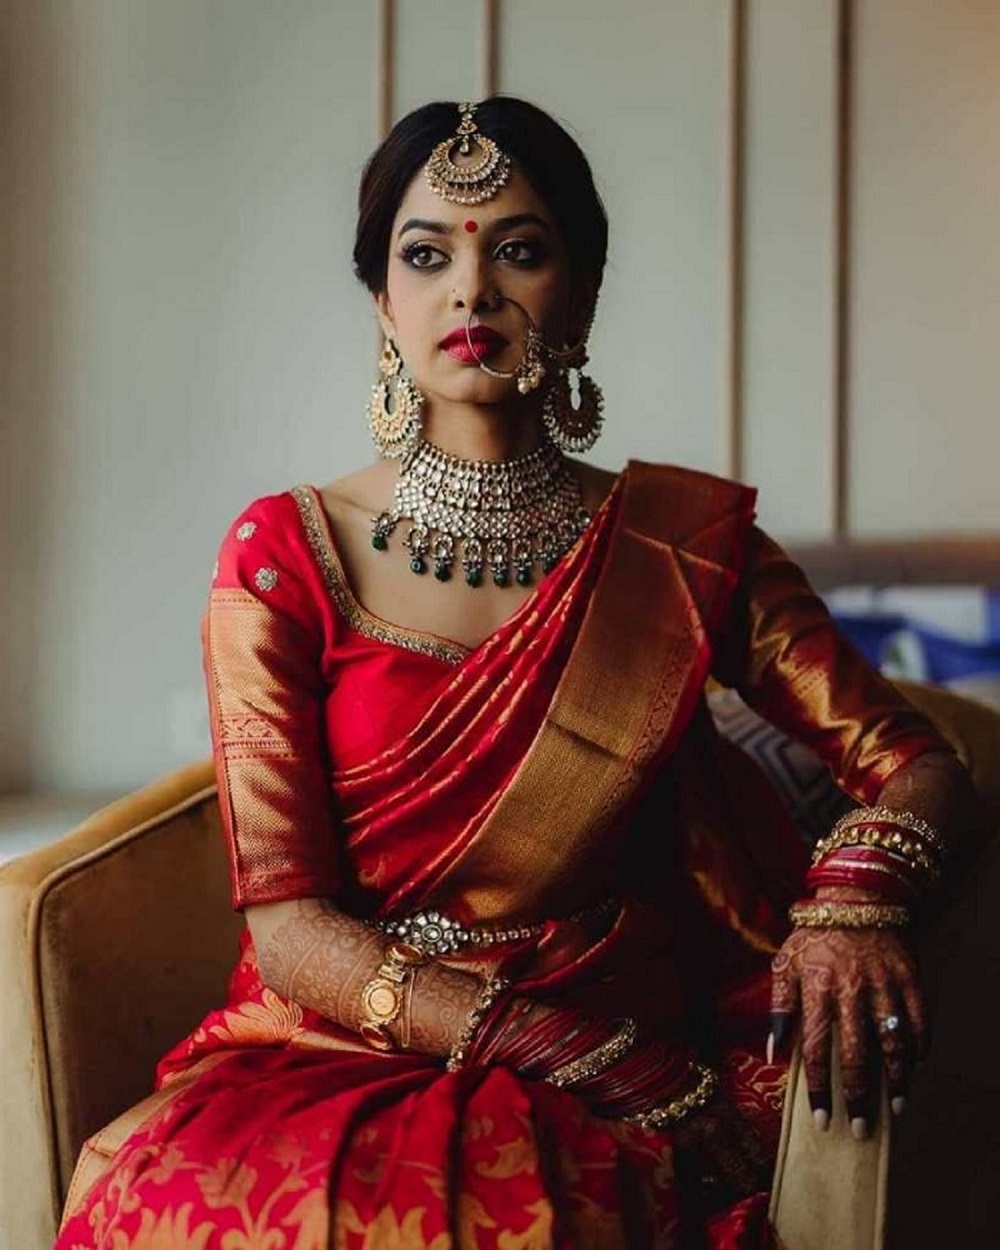 30+ Bridal Kanjivaram Sarees For Traditional Yet Modern Indian Brides To Take Inspiration From!